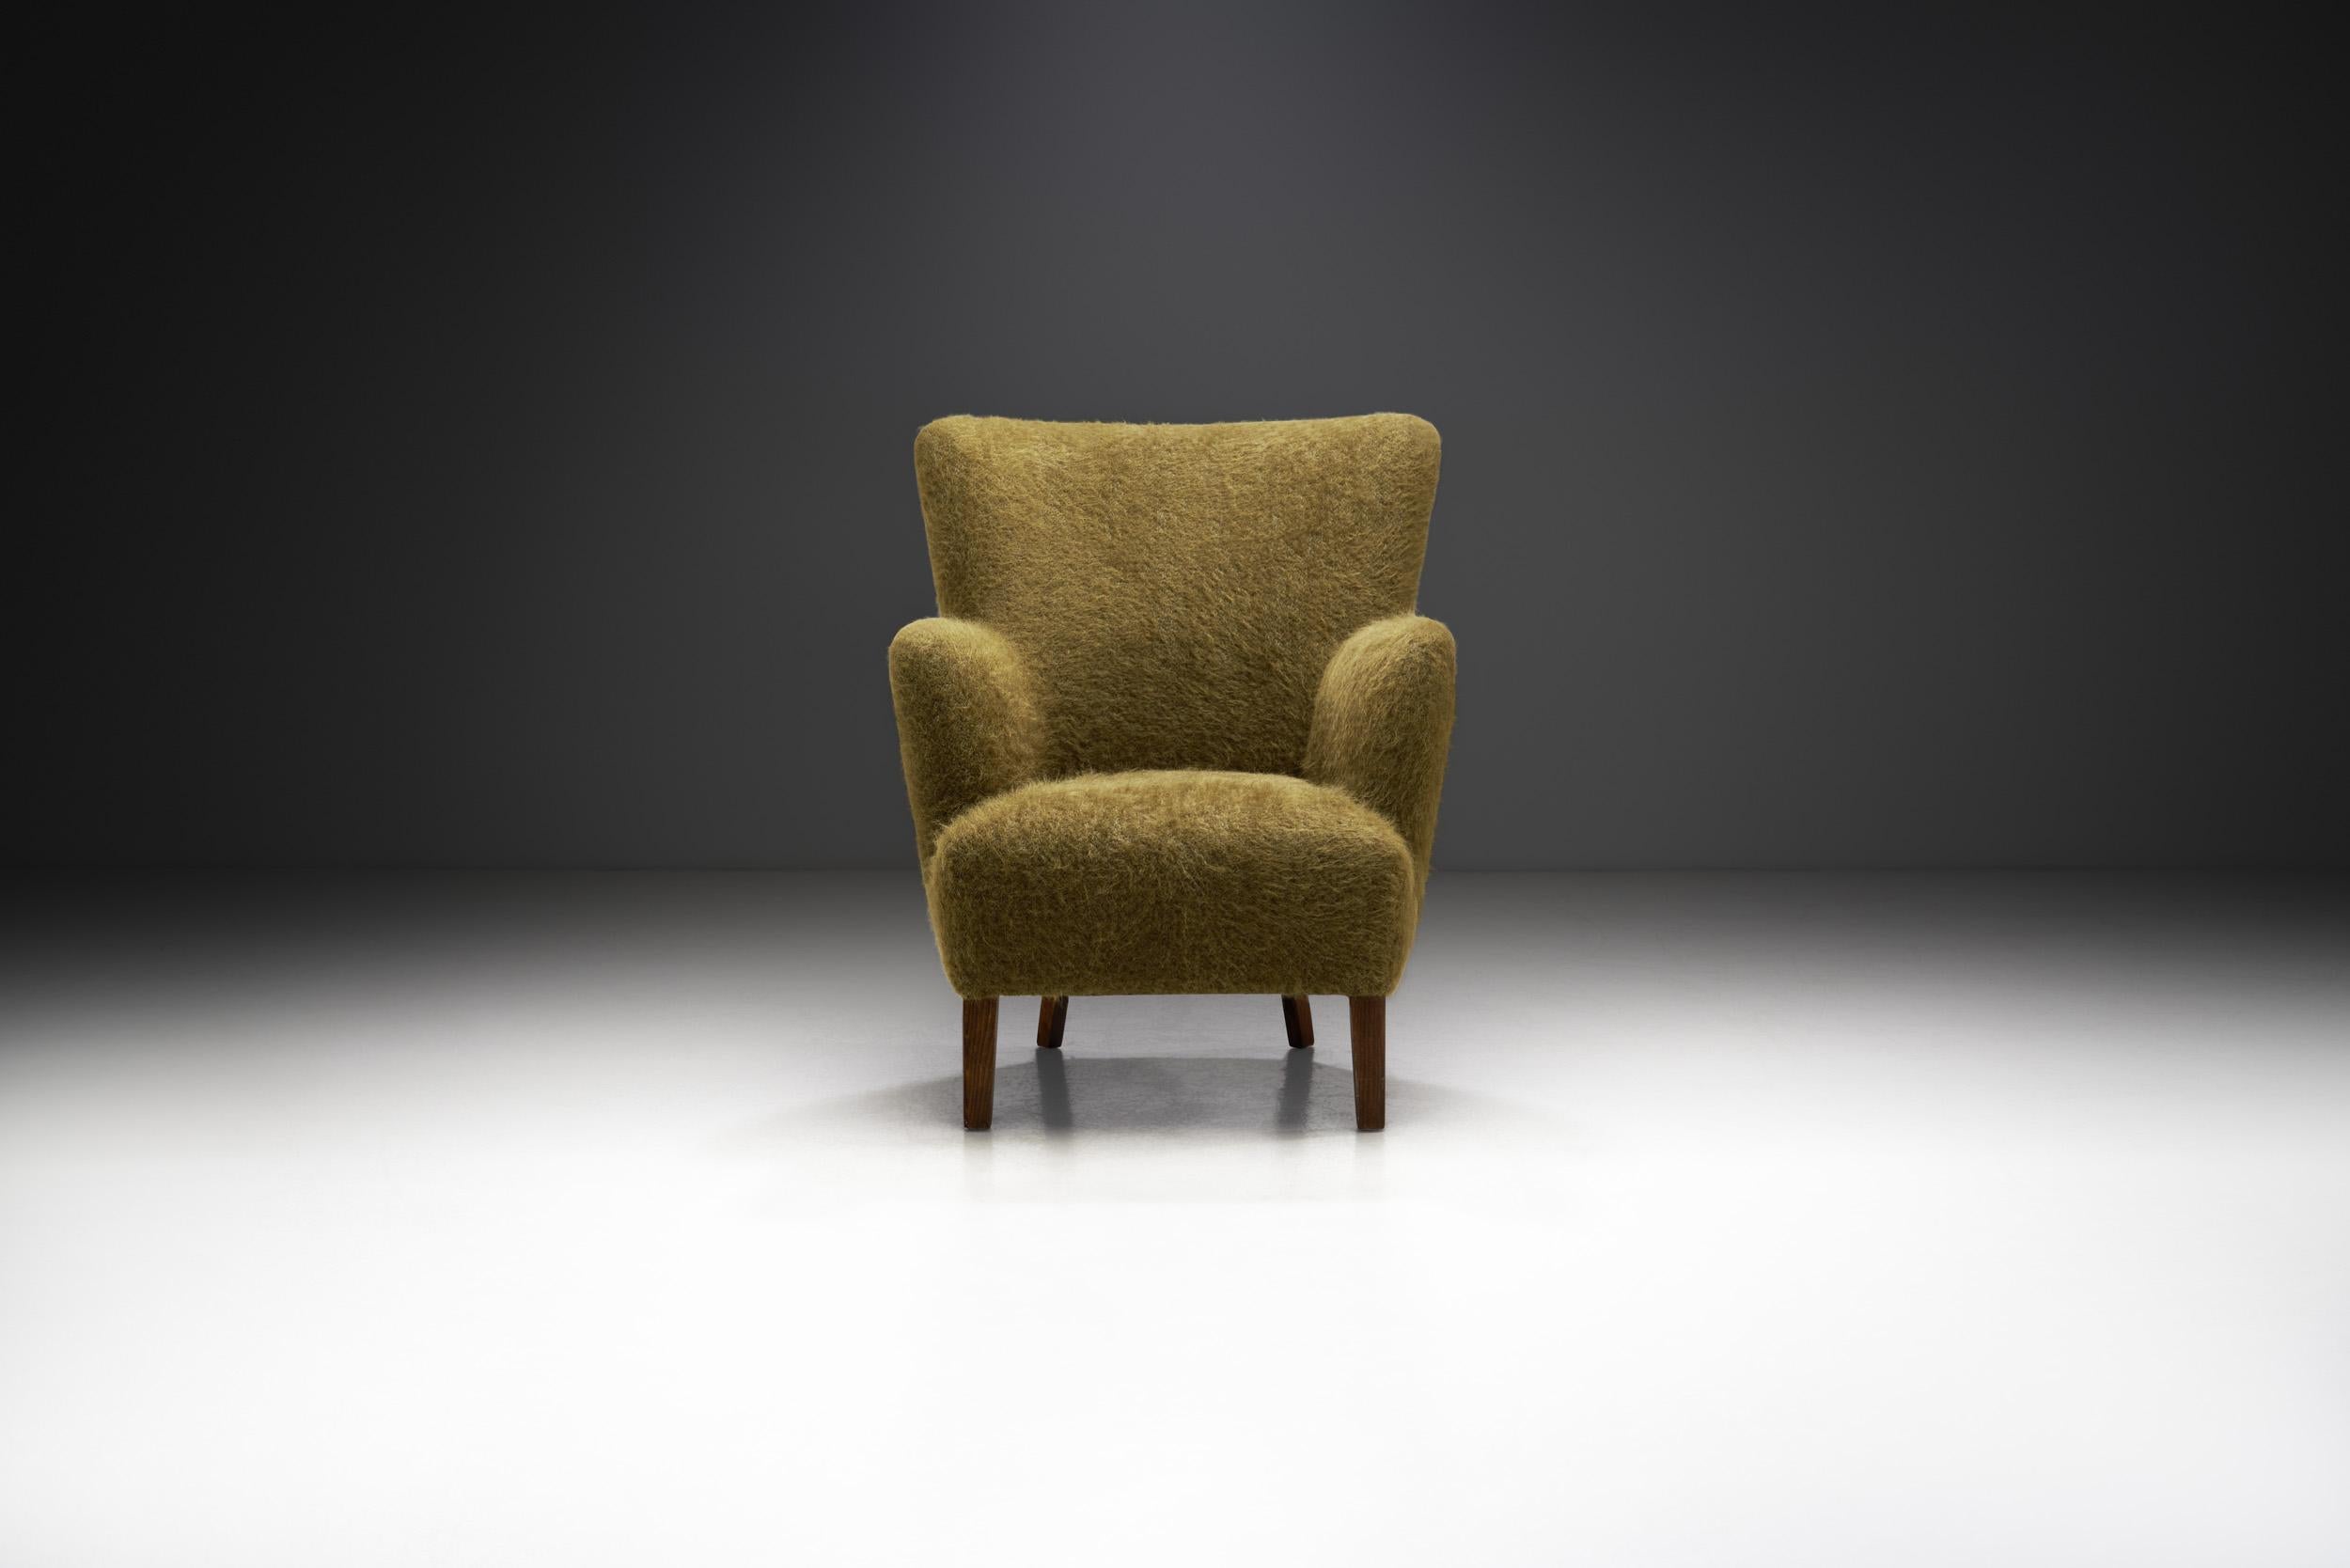 Scandinavian Modern Mid-Century Modern Danish Cabinetmaker Lounge Chair, Denmark, 1940s For Sale